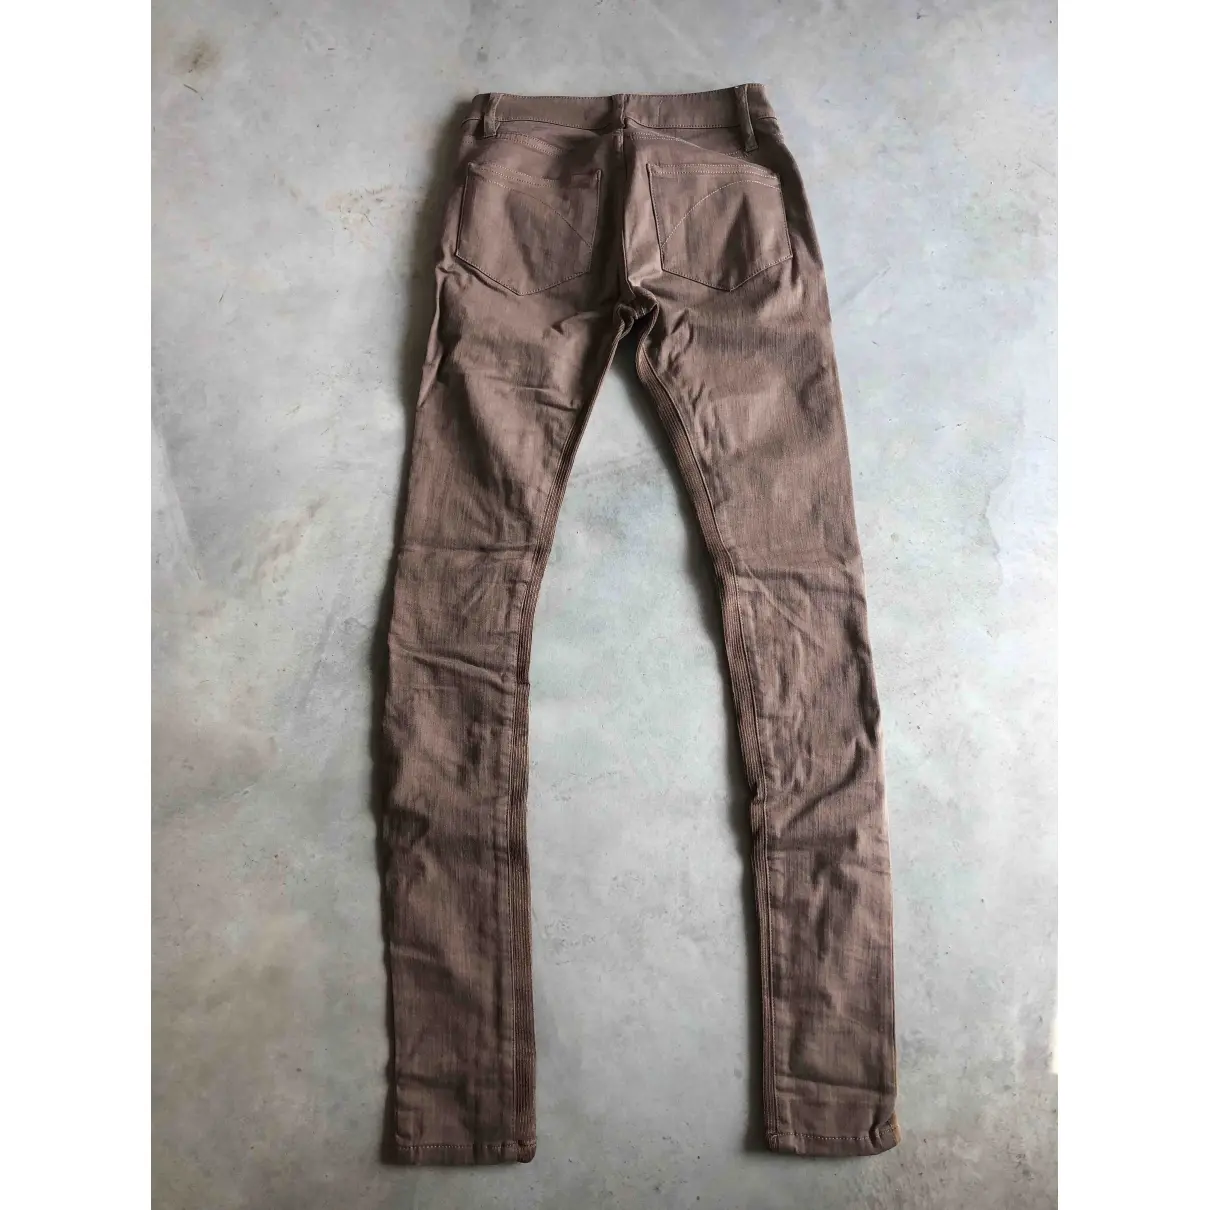 Superfine Leather slim pants for sale